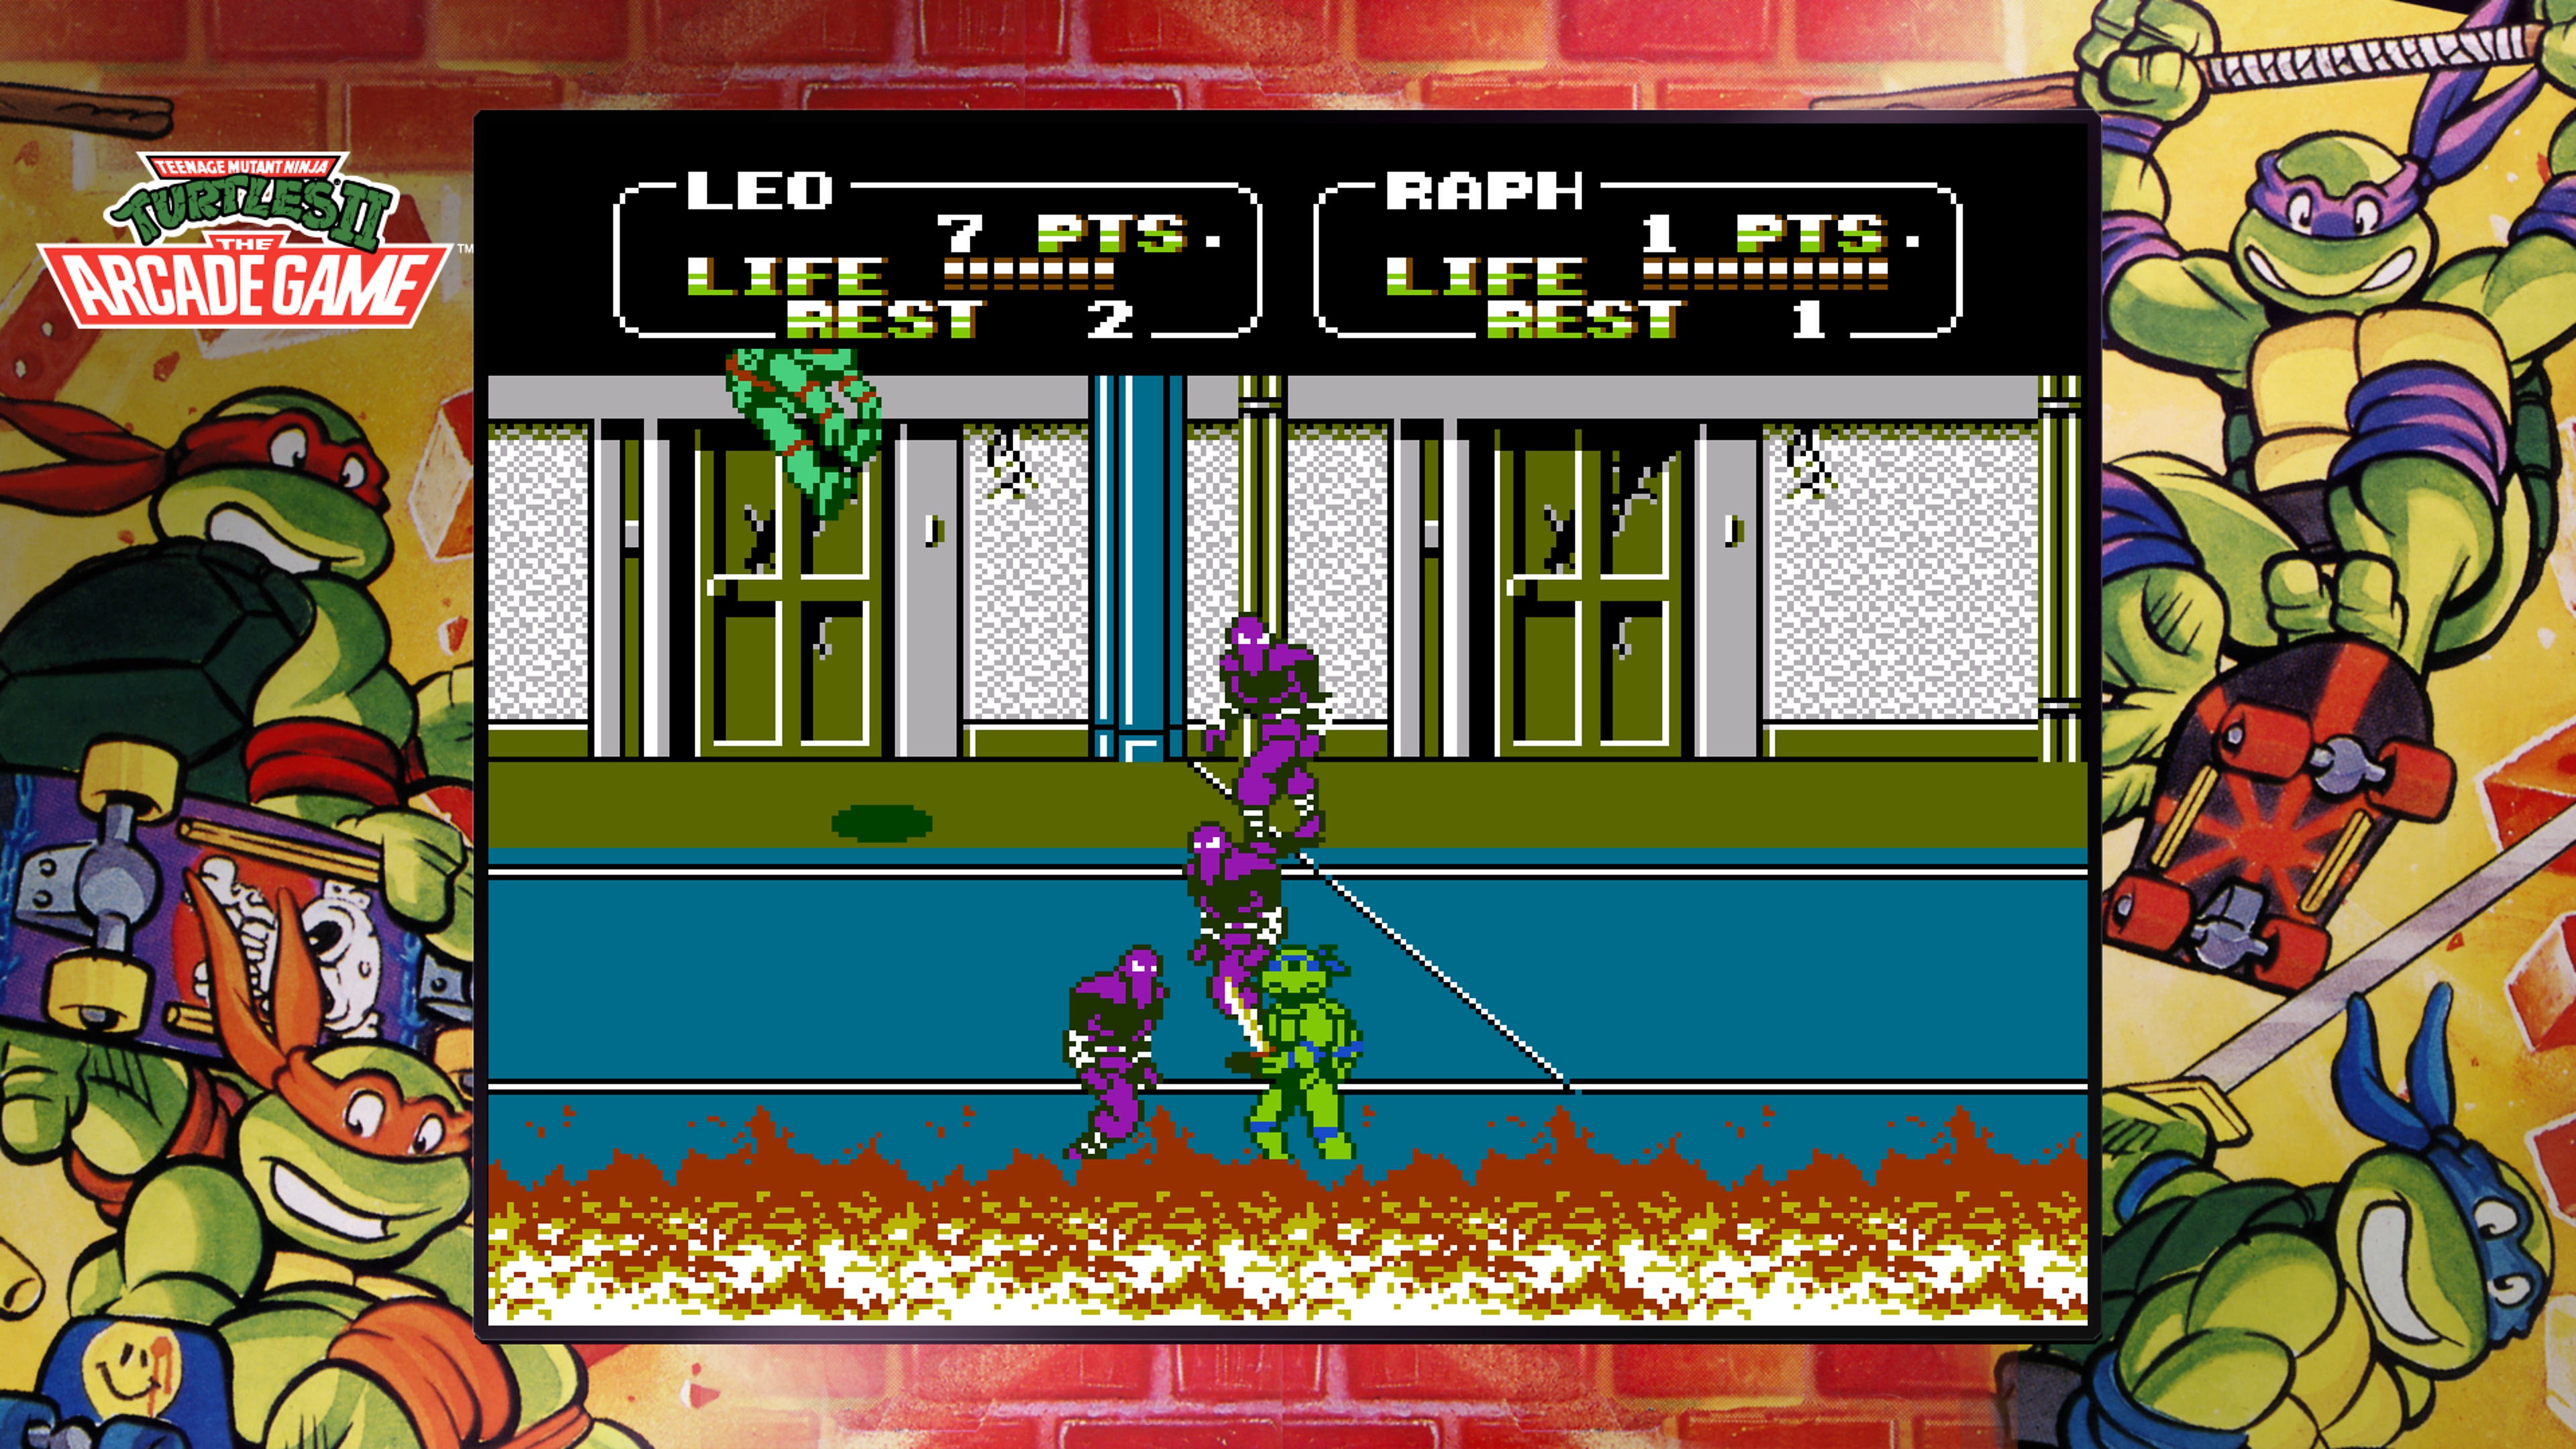 Kolekce Teenage Mutant Ninja Turtles – screenshot ze hry The Arcade Game, kde Leonardo bojuje s klanem Foot